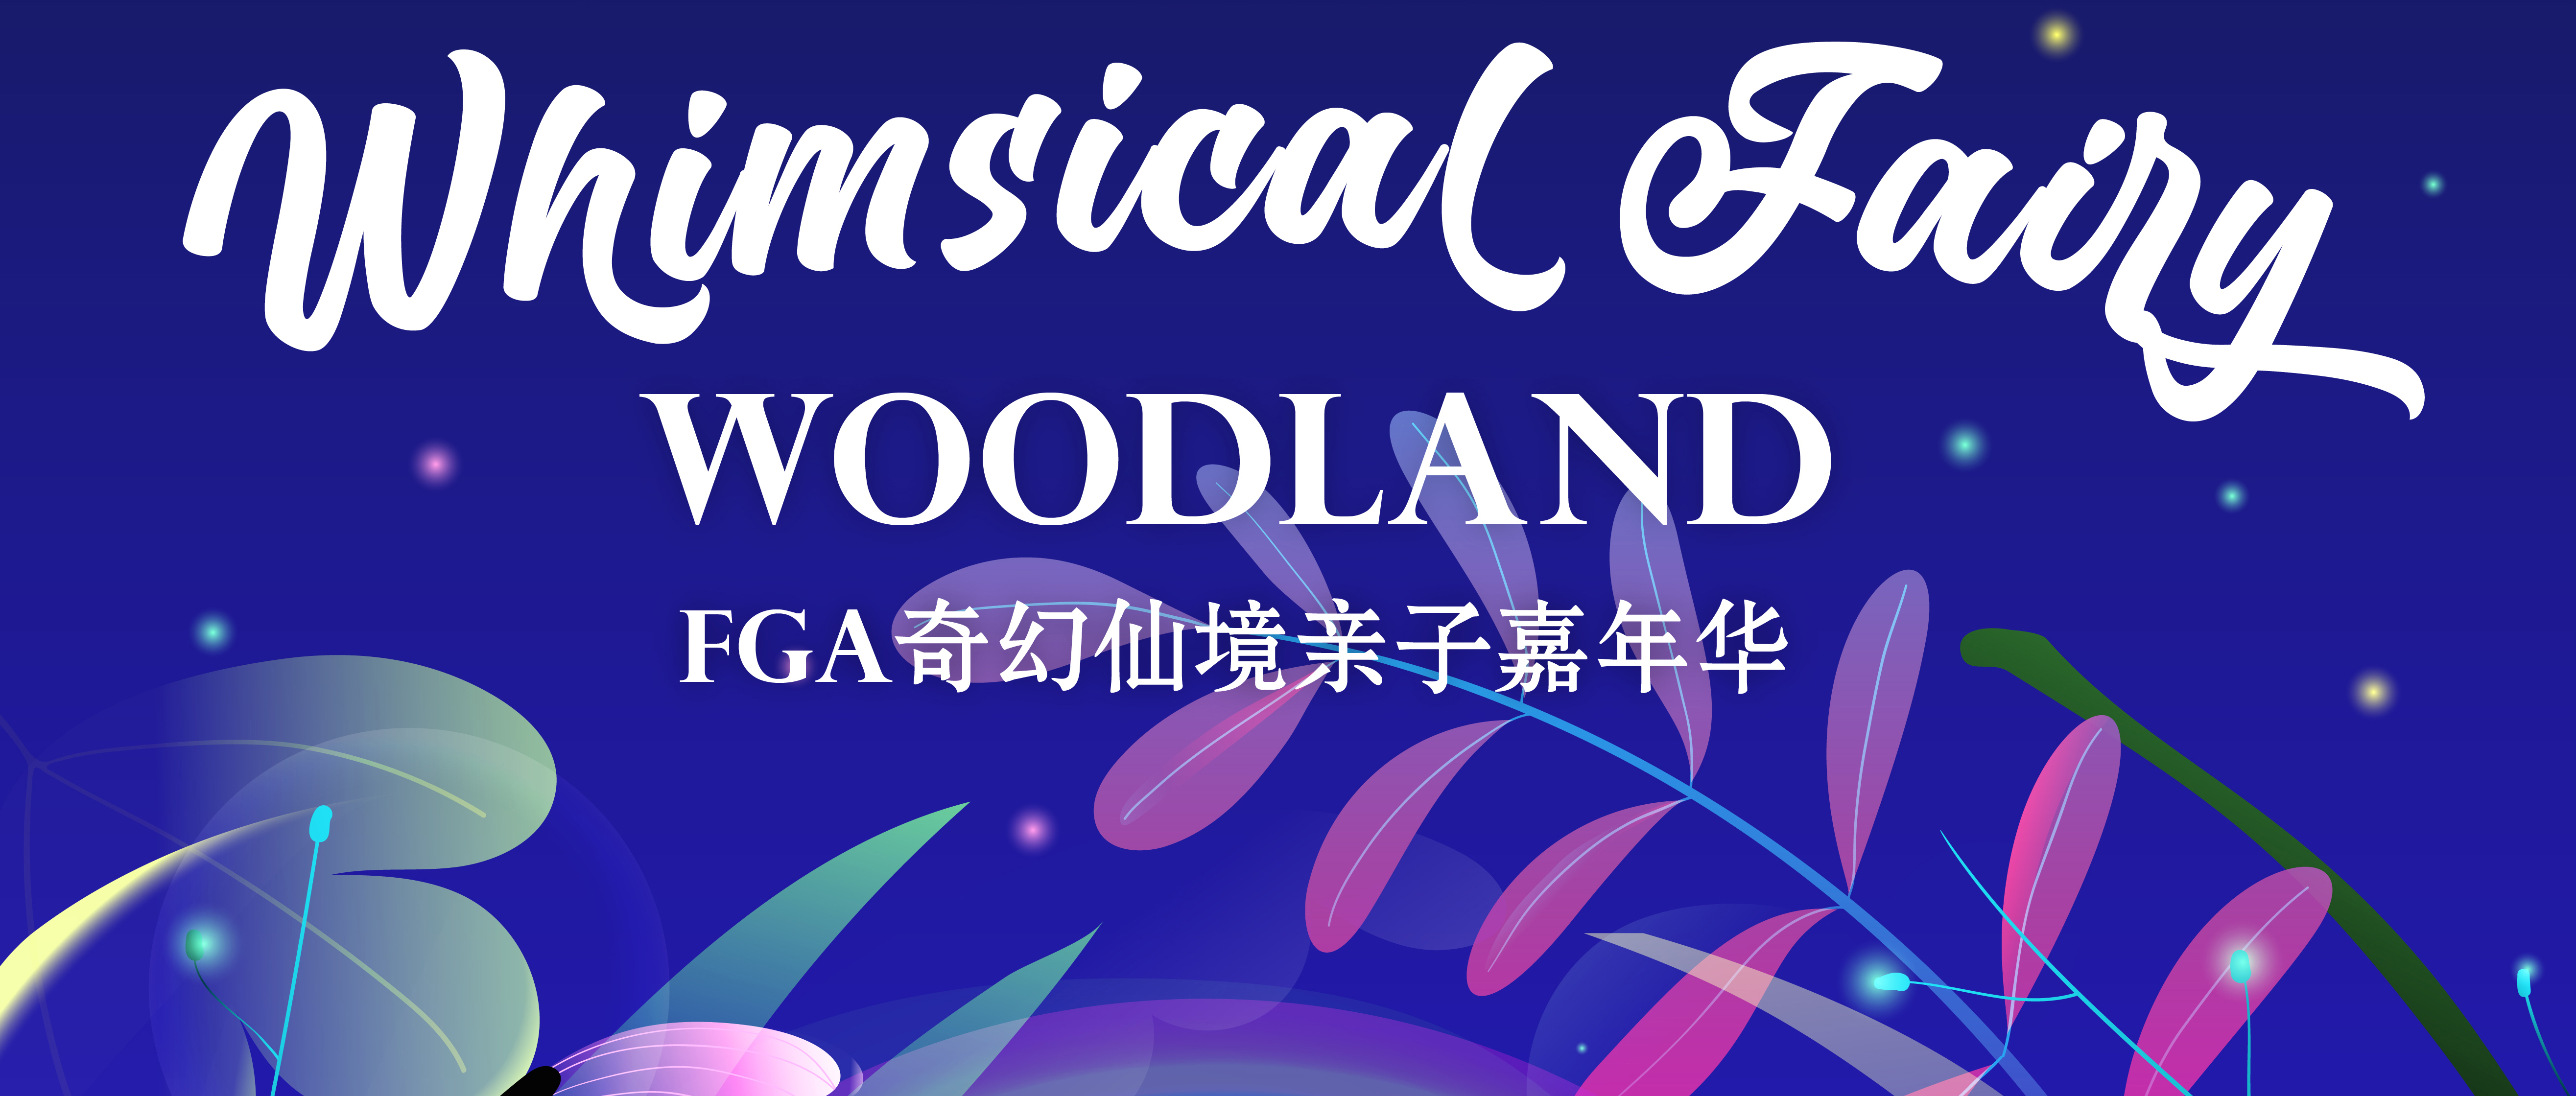 Invitation From FGA Whimsical Fairy Woodland